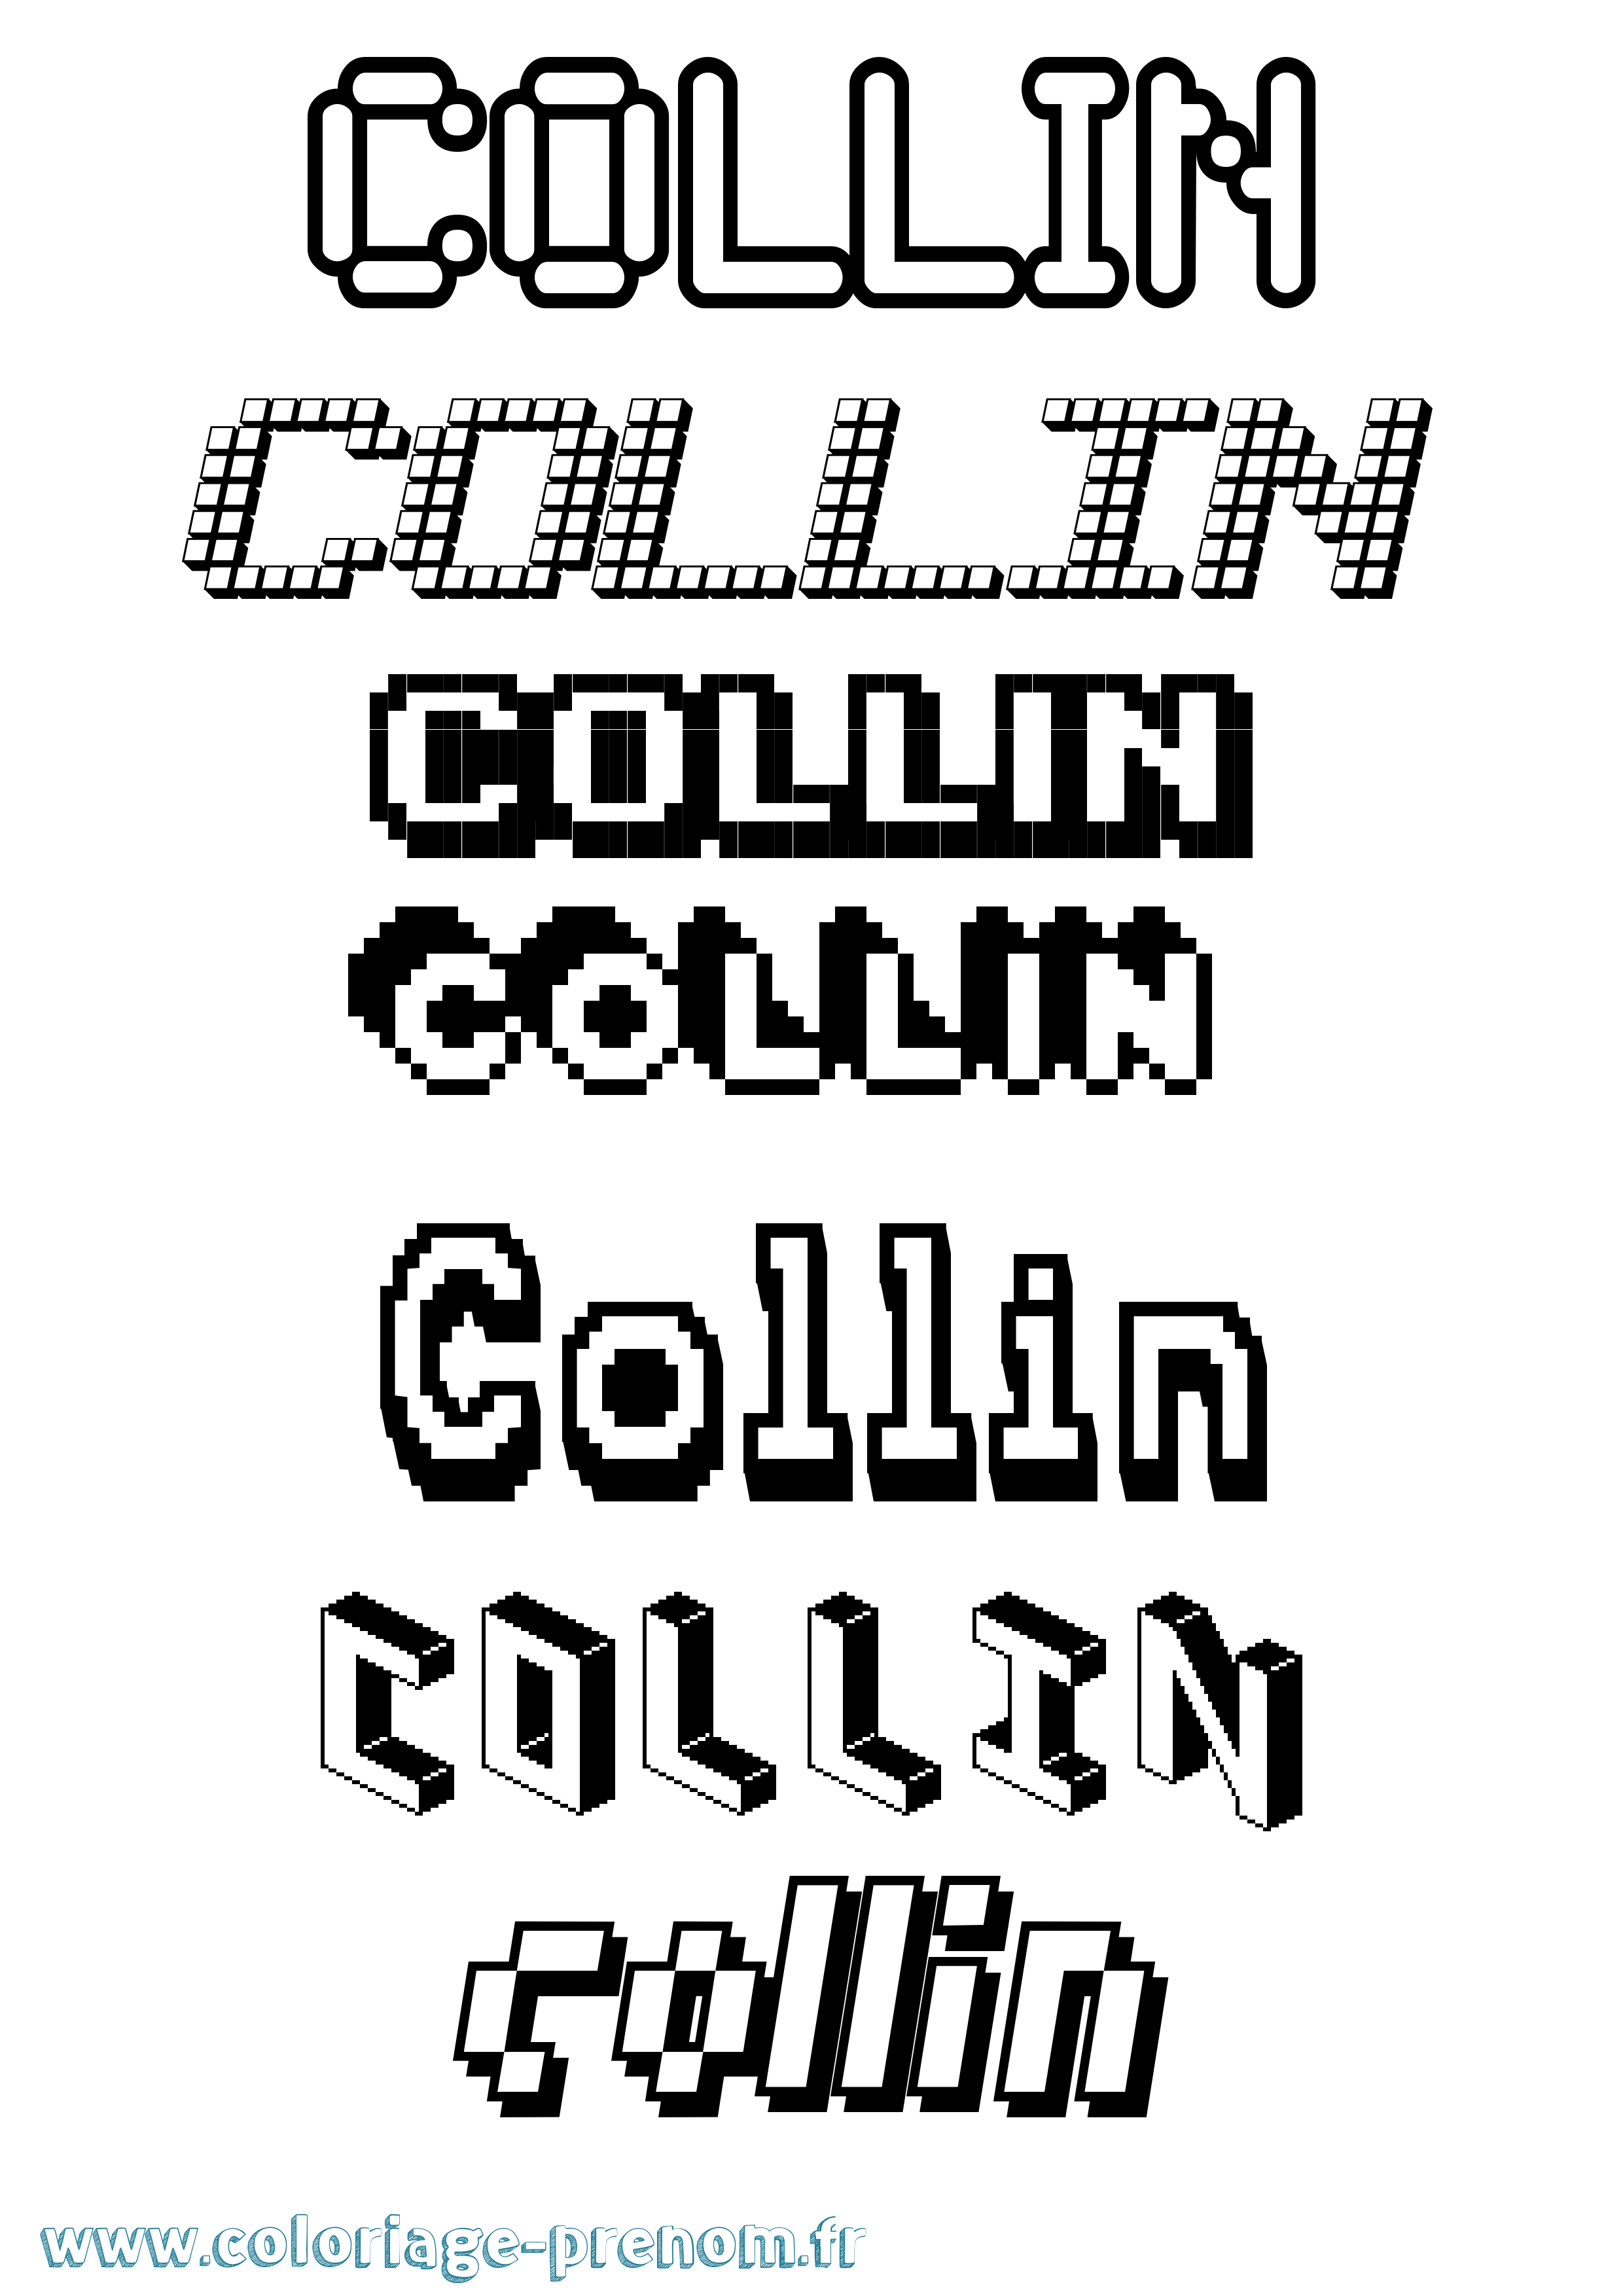 Coloriage prénom Collin Pixel